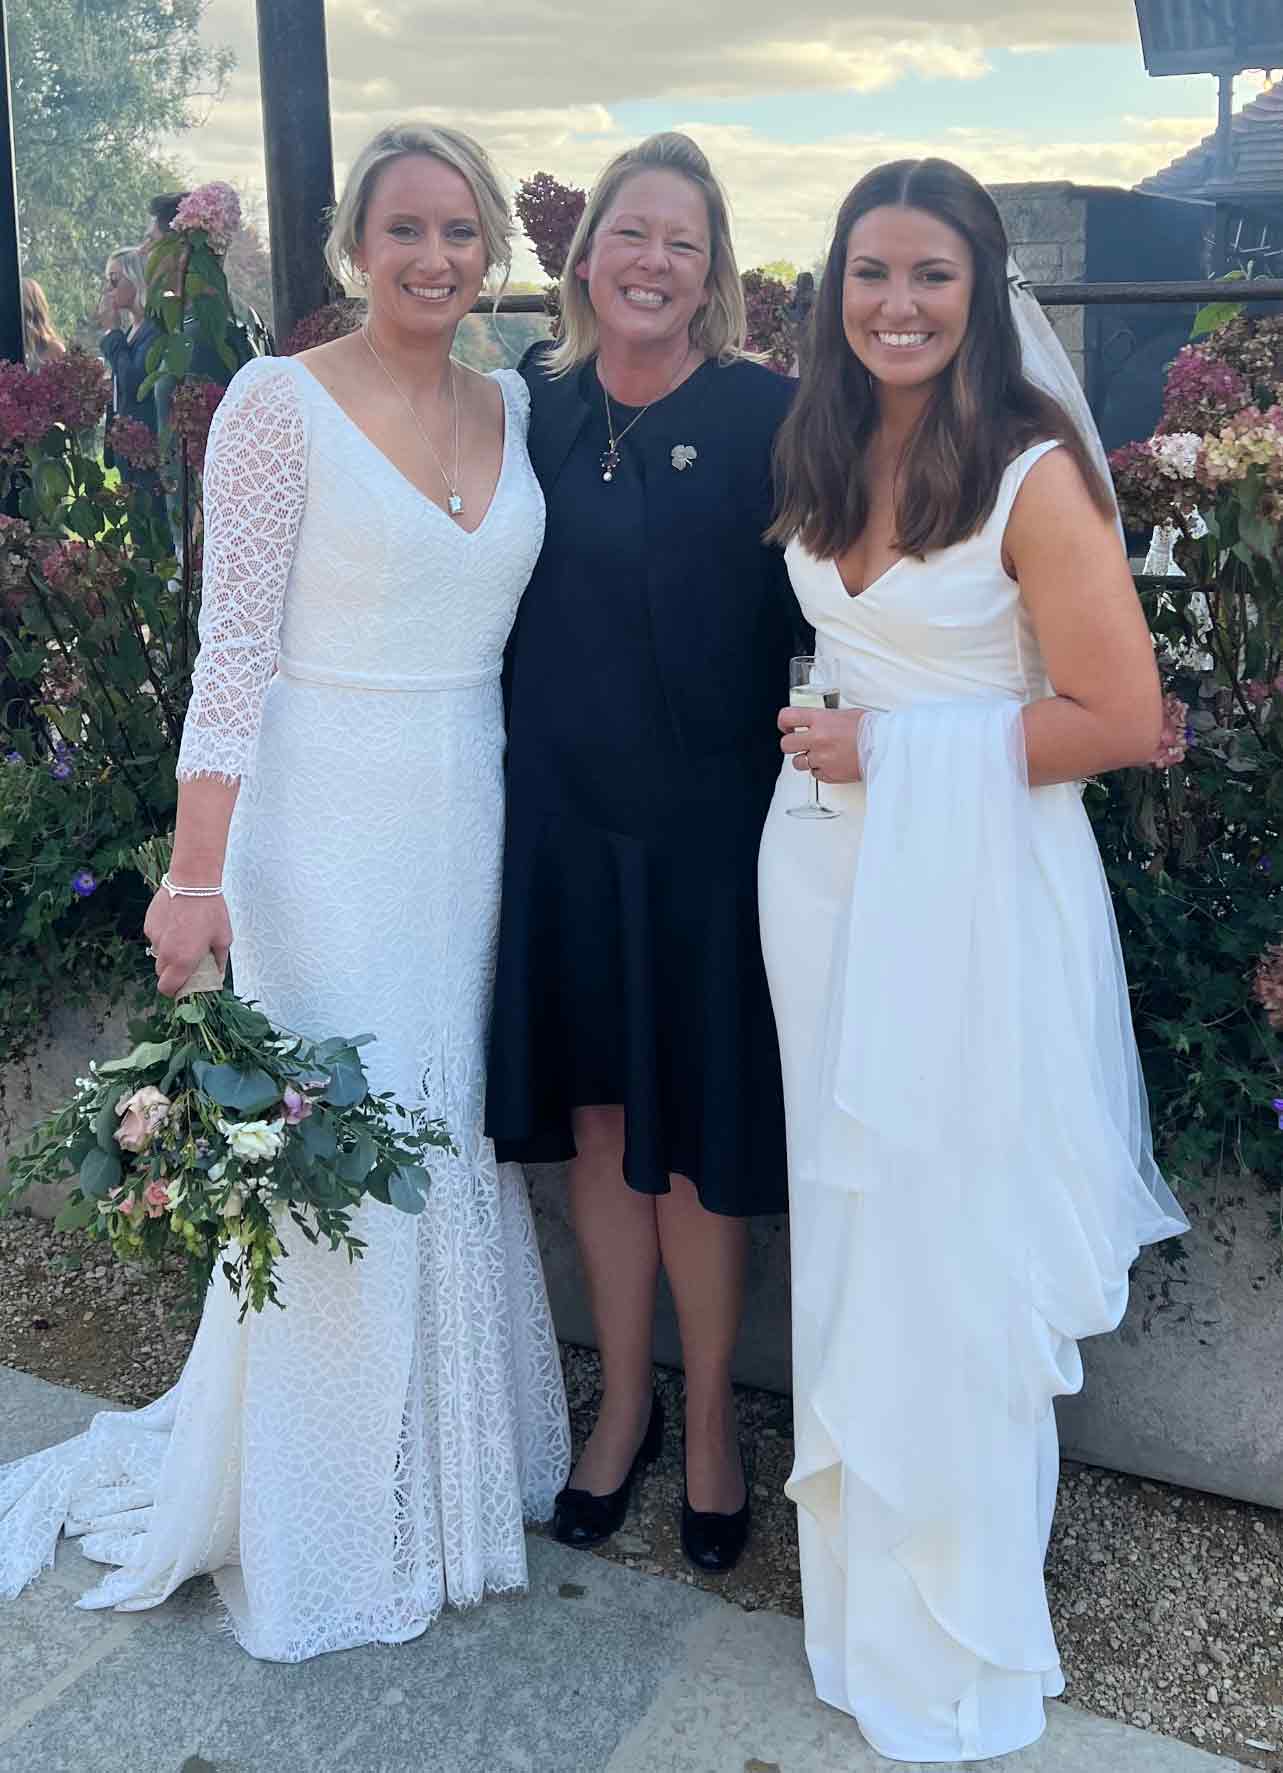 Two happy brides at their celebrant wedding with Tara